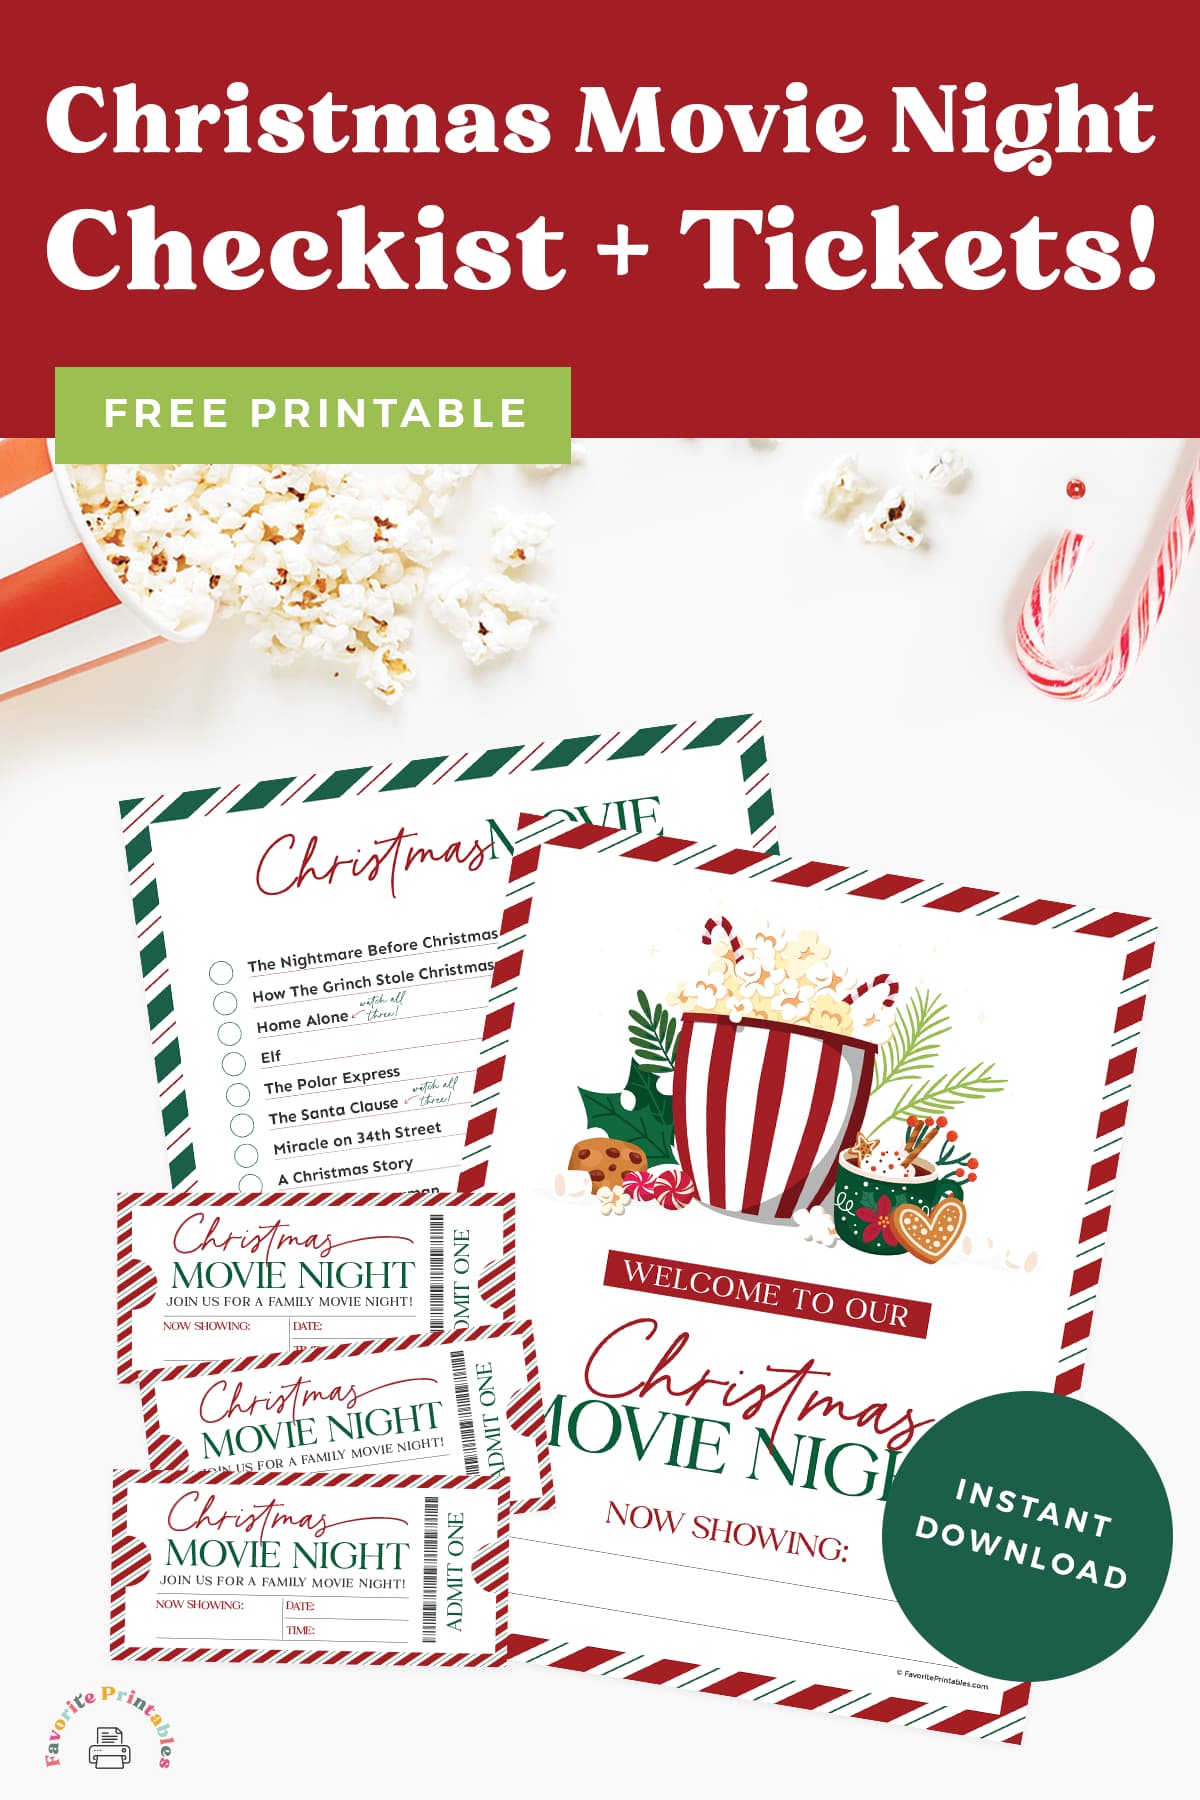 Free printable Christmas movie night checklist and tickets pin.